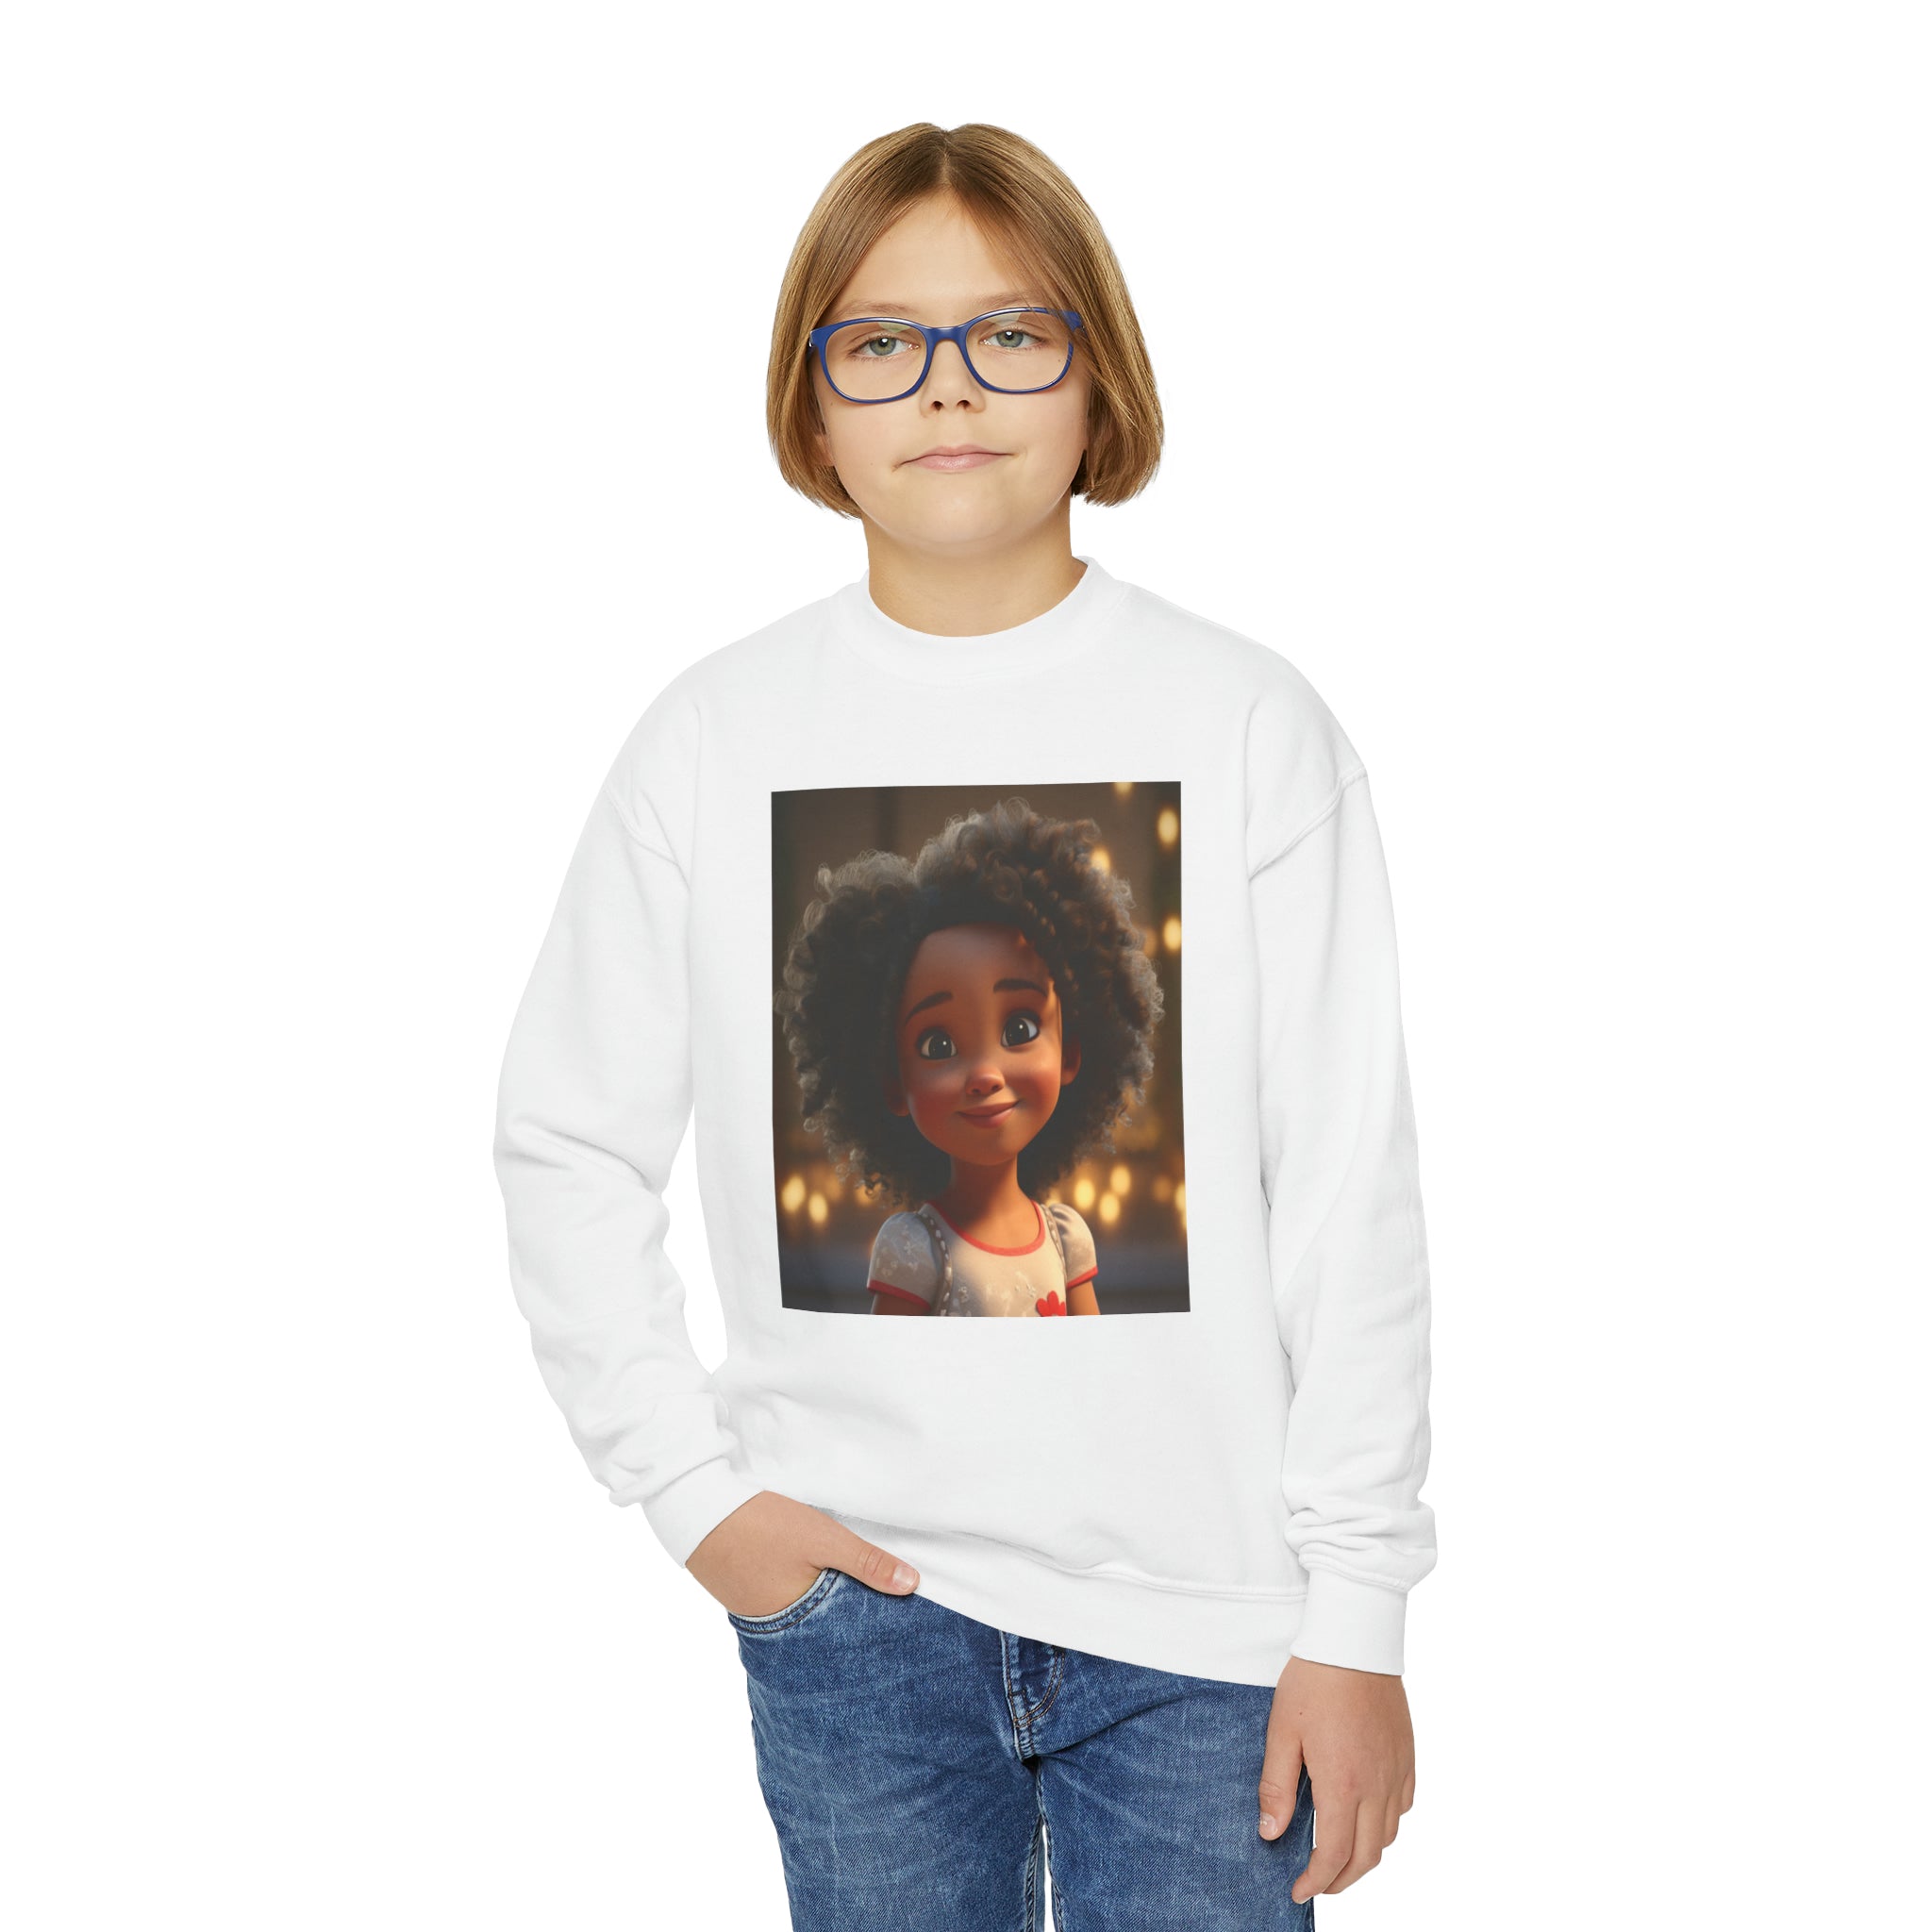 "Kid's Creative Artwear Sweatshirt"